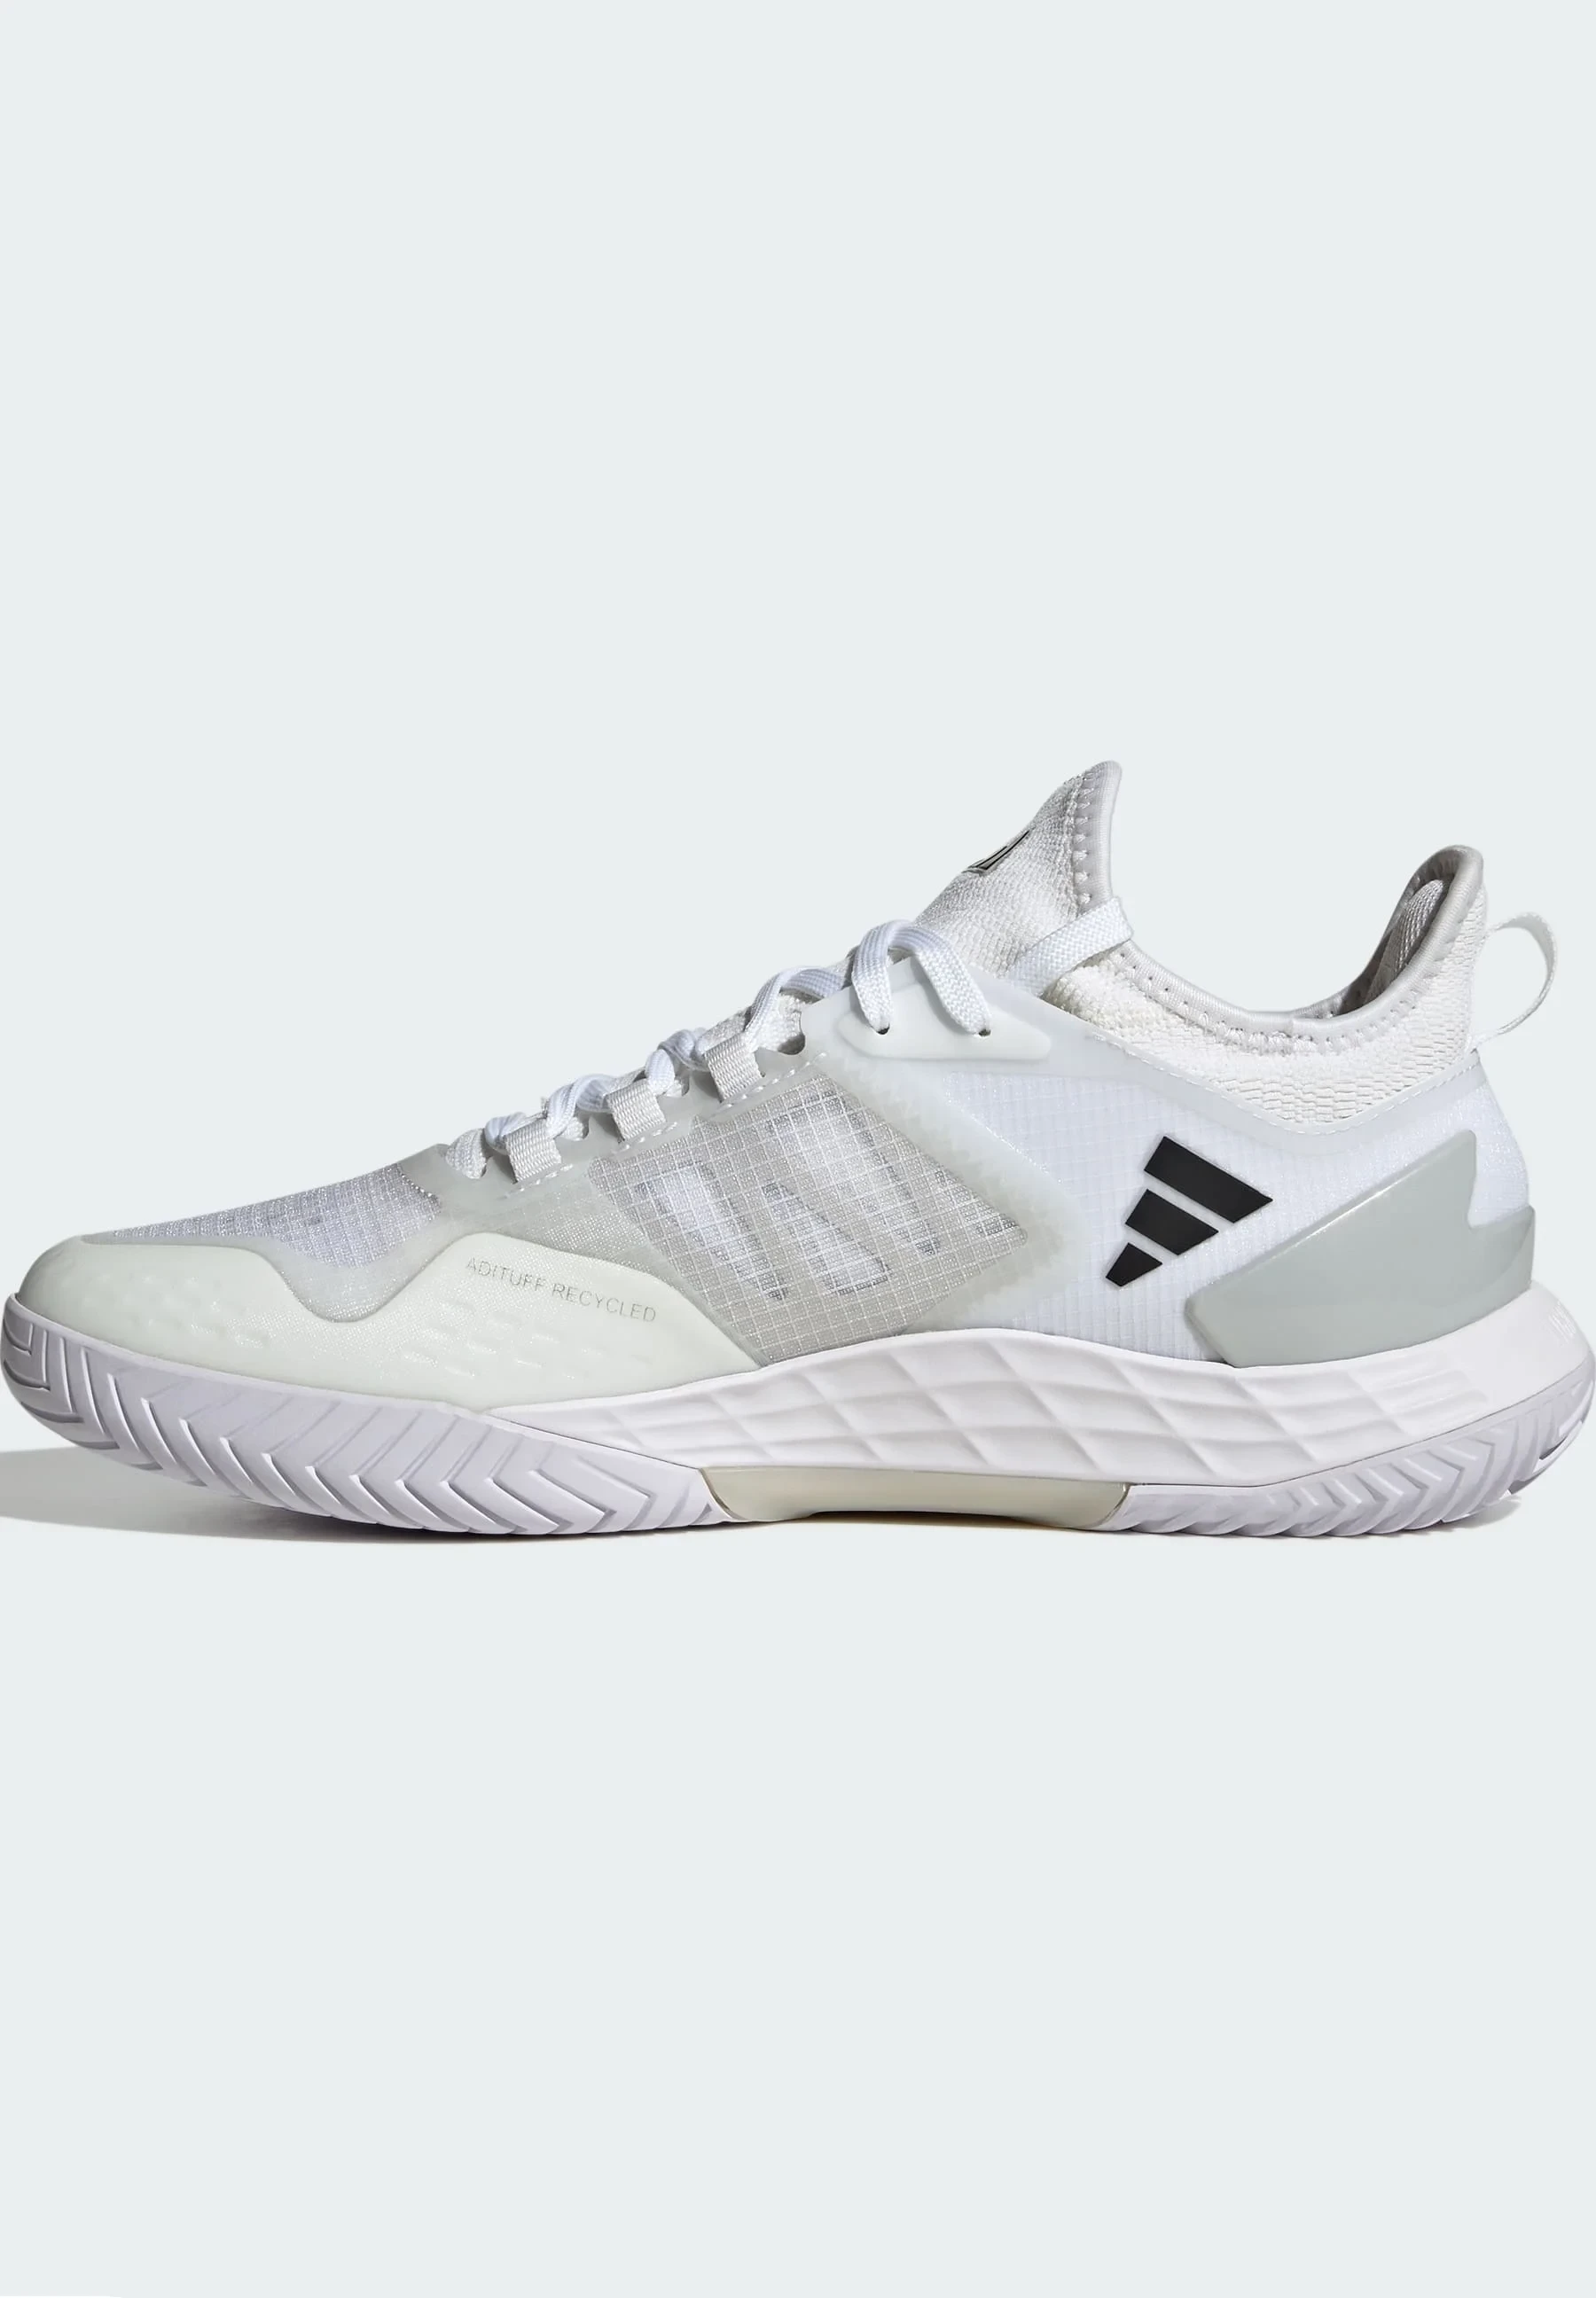 Adidas Adizero Ubersonic 4.1 CL M weiß